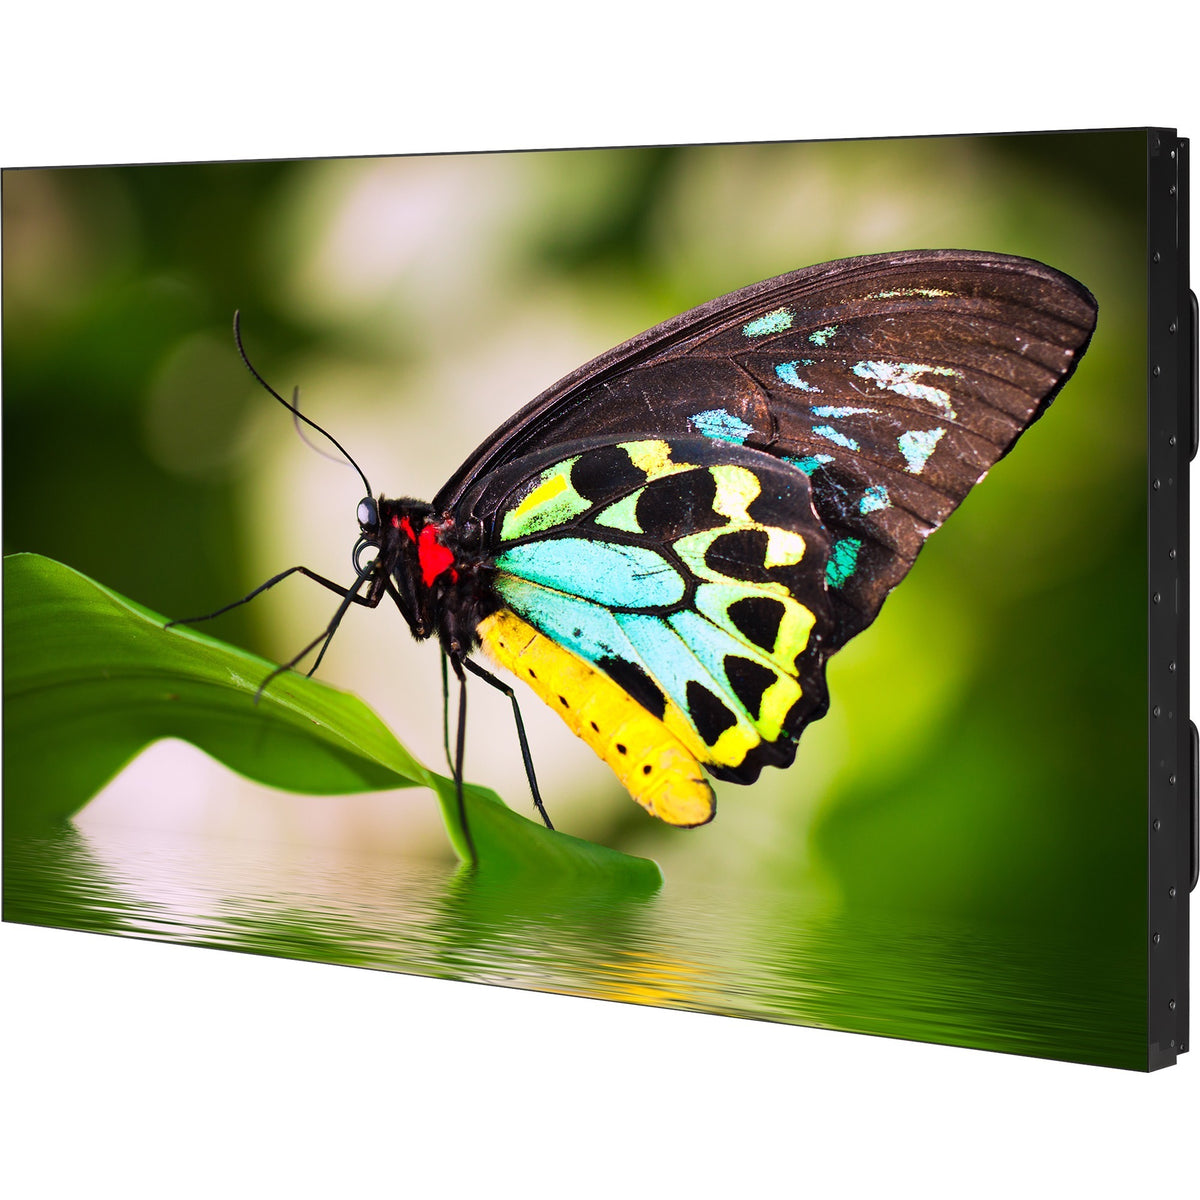 NEC Display 55" Ultra-Narrow Bezel 4 display video wall - UN552-TMX4P